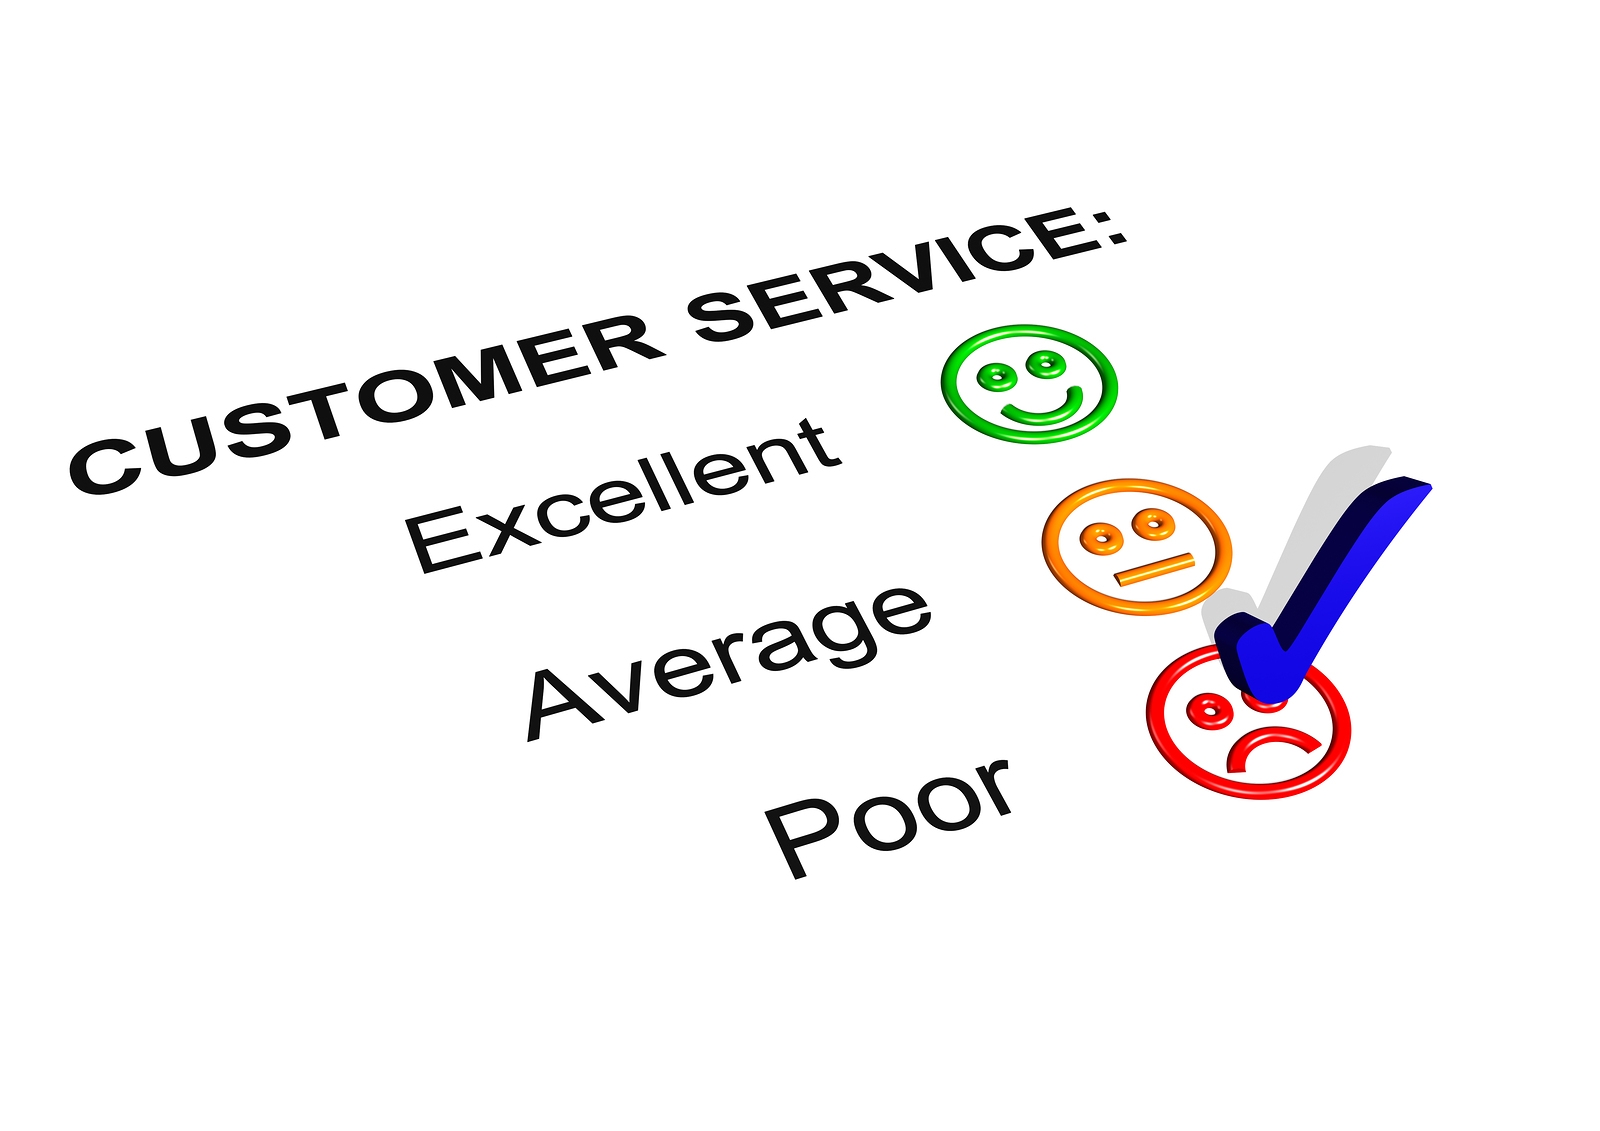 bigstock-Poor-Customer-Service-Rating-20081186